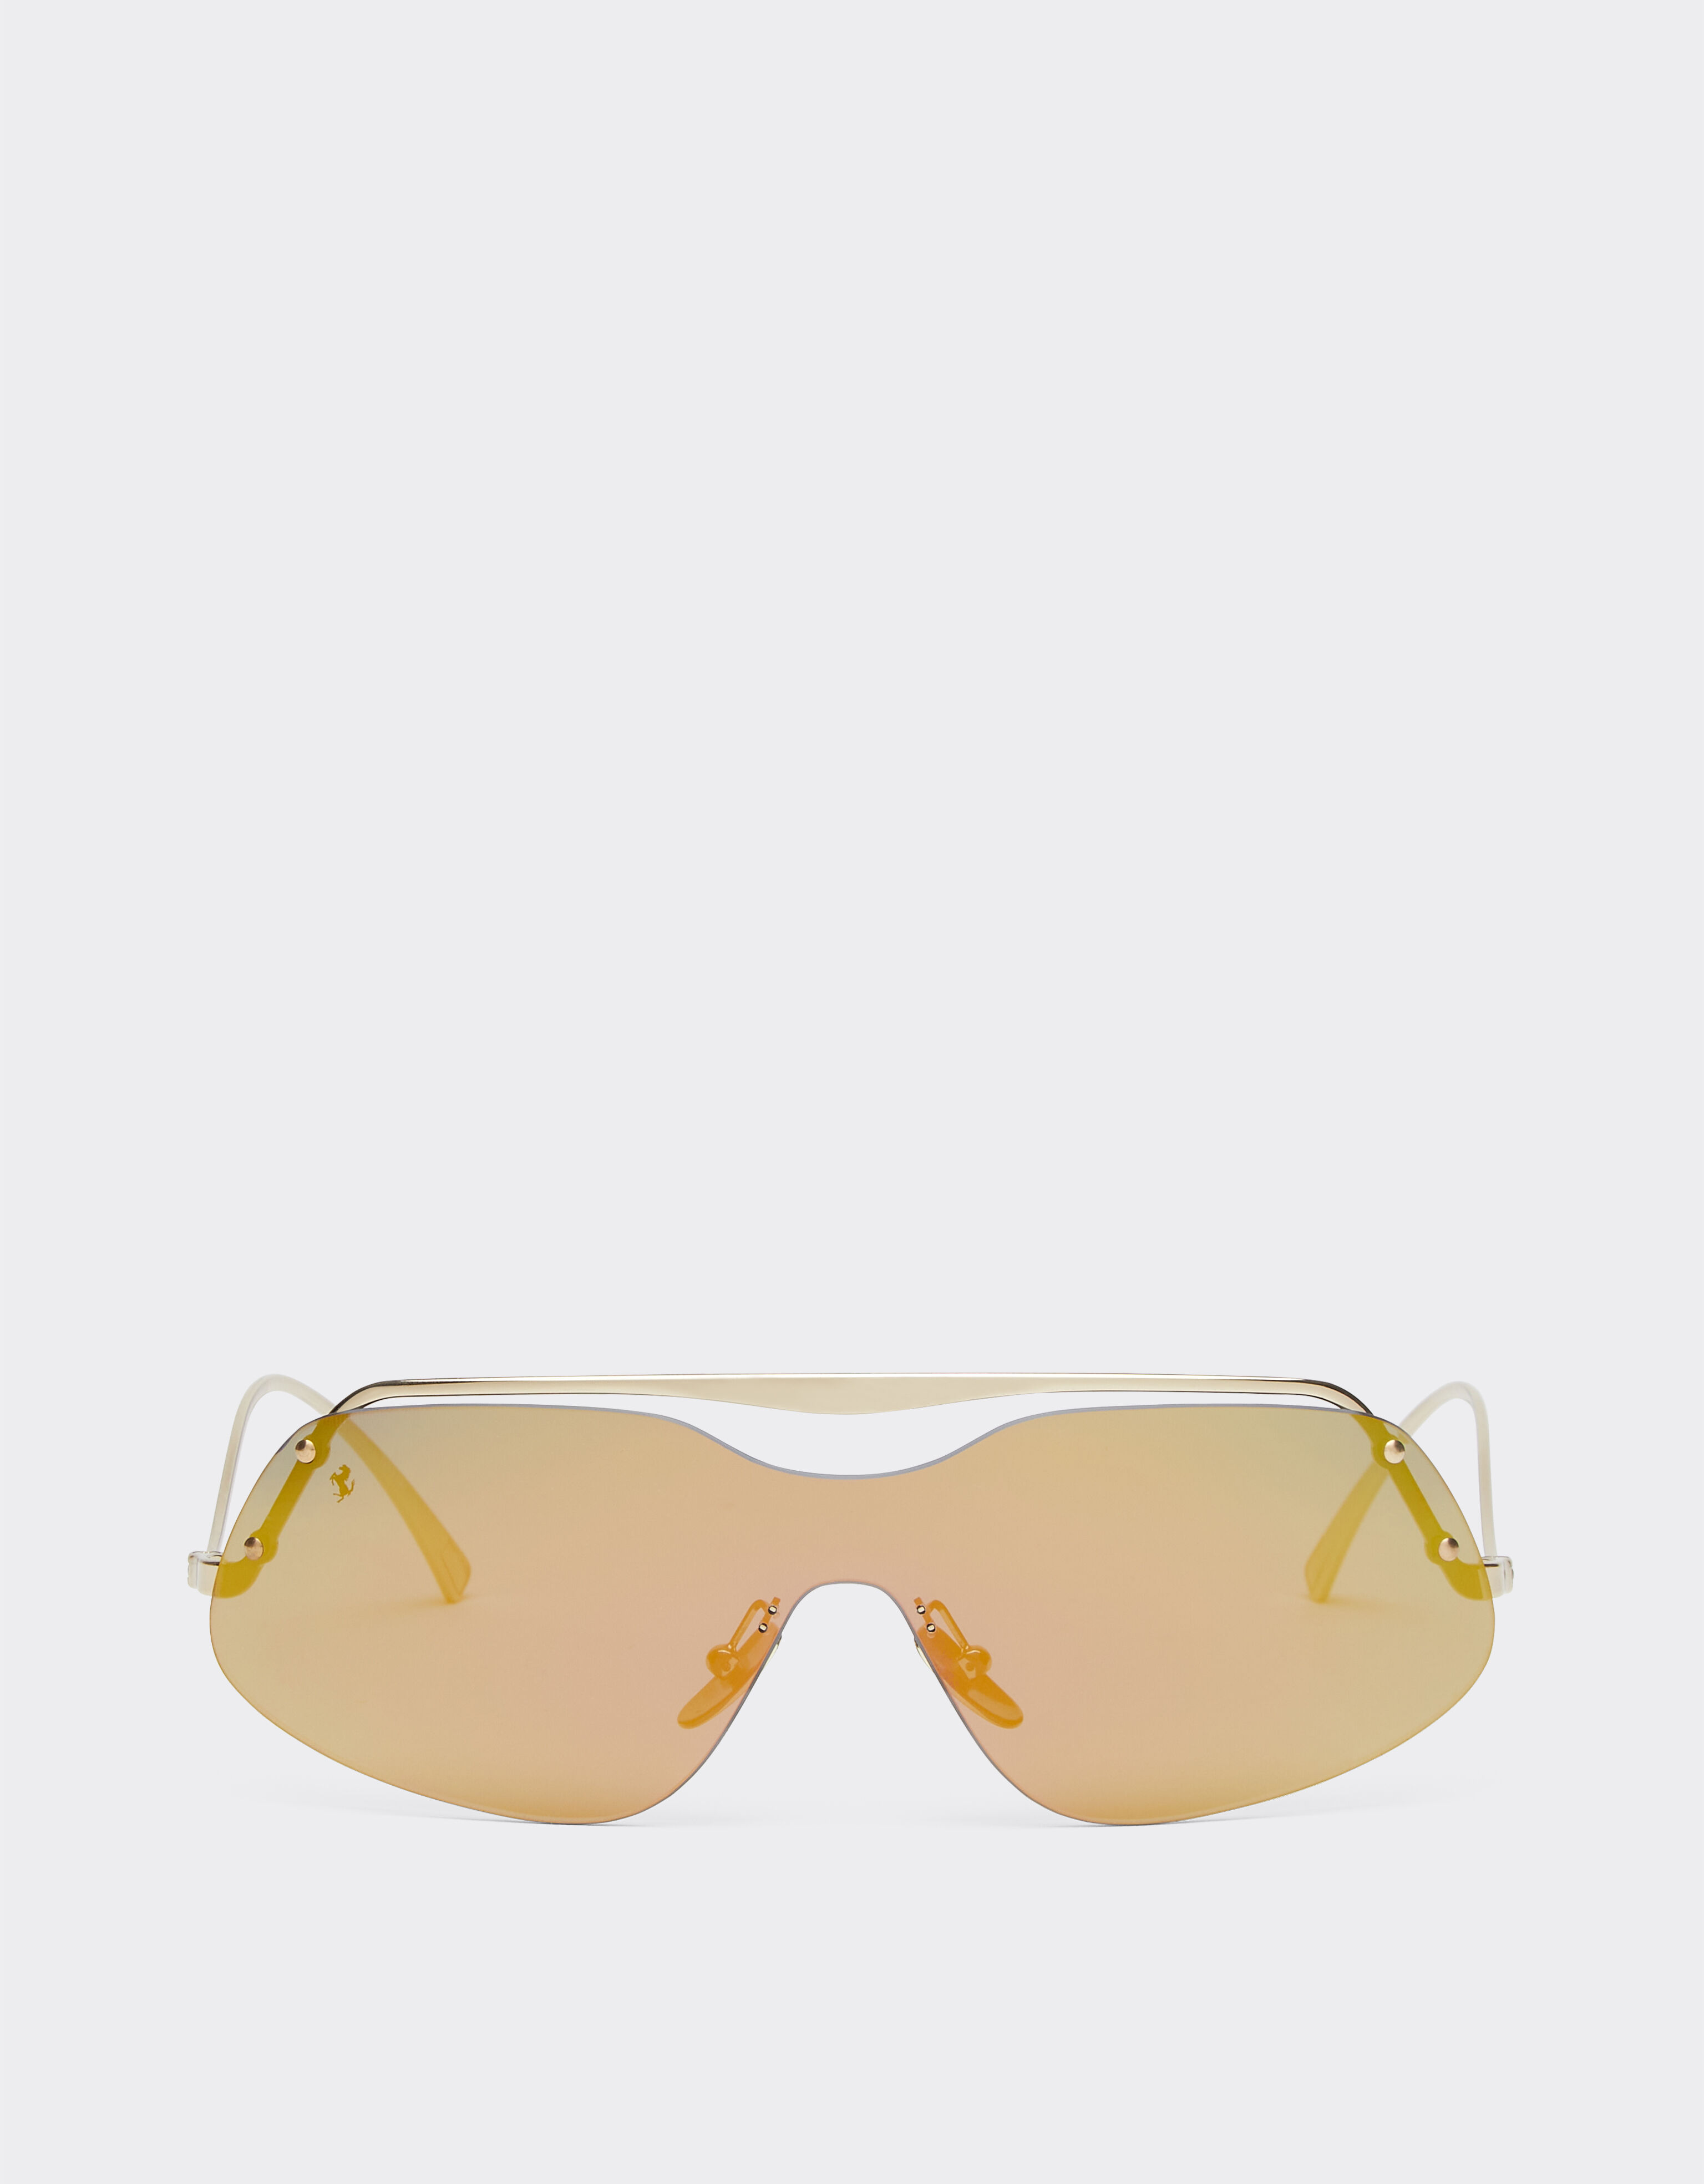 Ferrari Ferrari sunglasses in gold-tone metal with blue mirror gold lenses Black F1201f